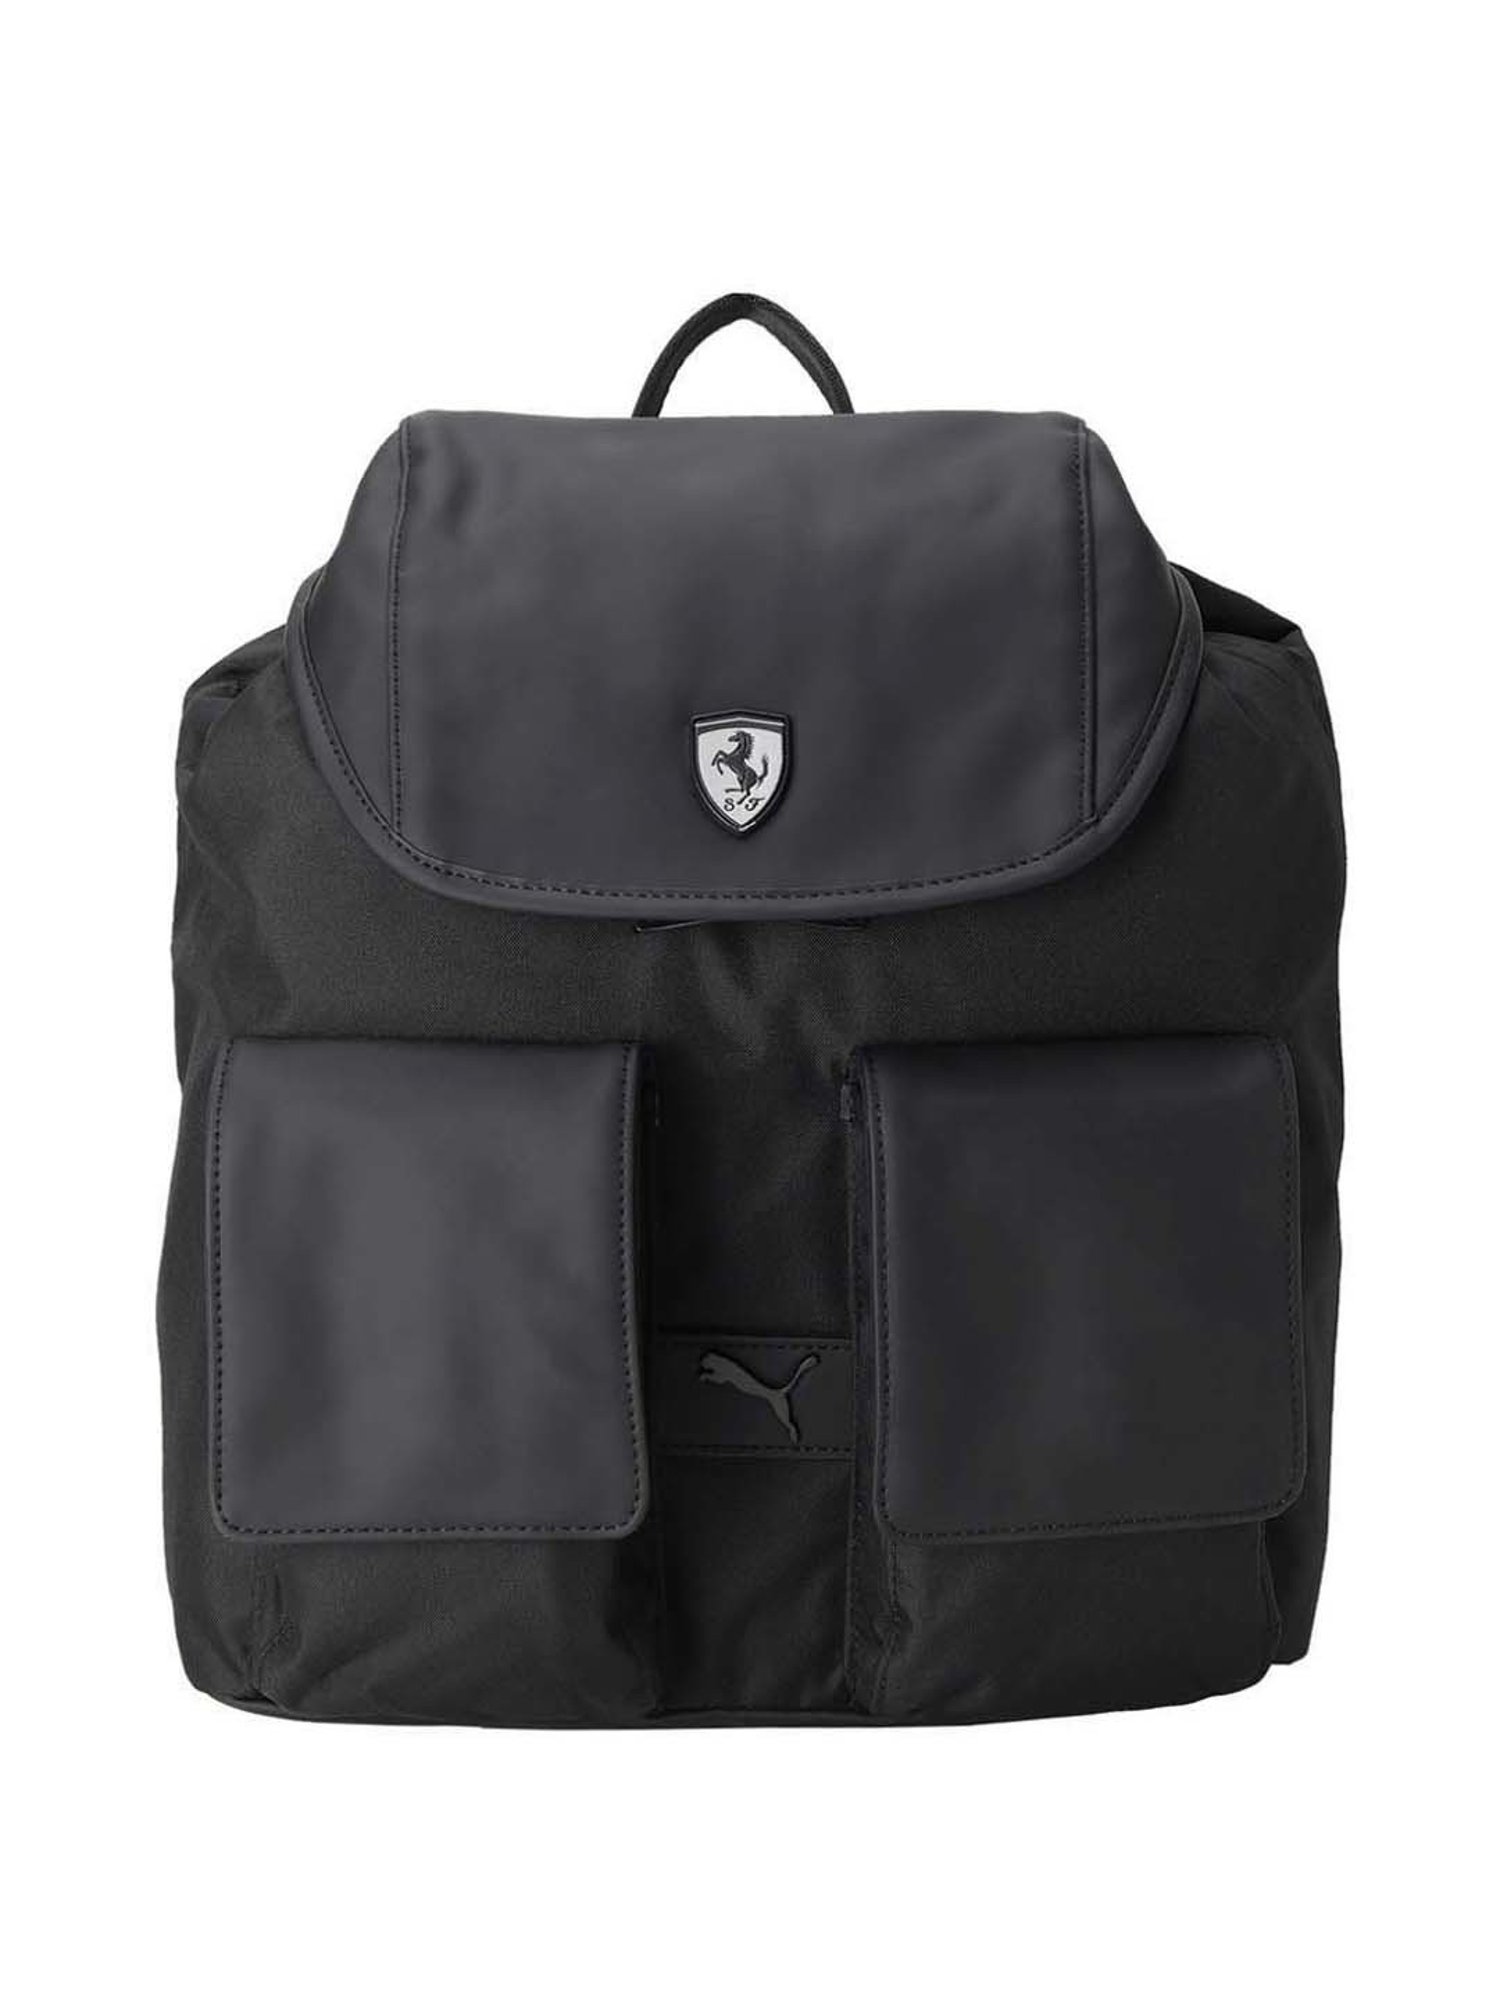 Buy ZnM latest swimming bag/picnic bag/school bag/ ferrari bag/basketball  bag at Amazon.in